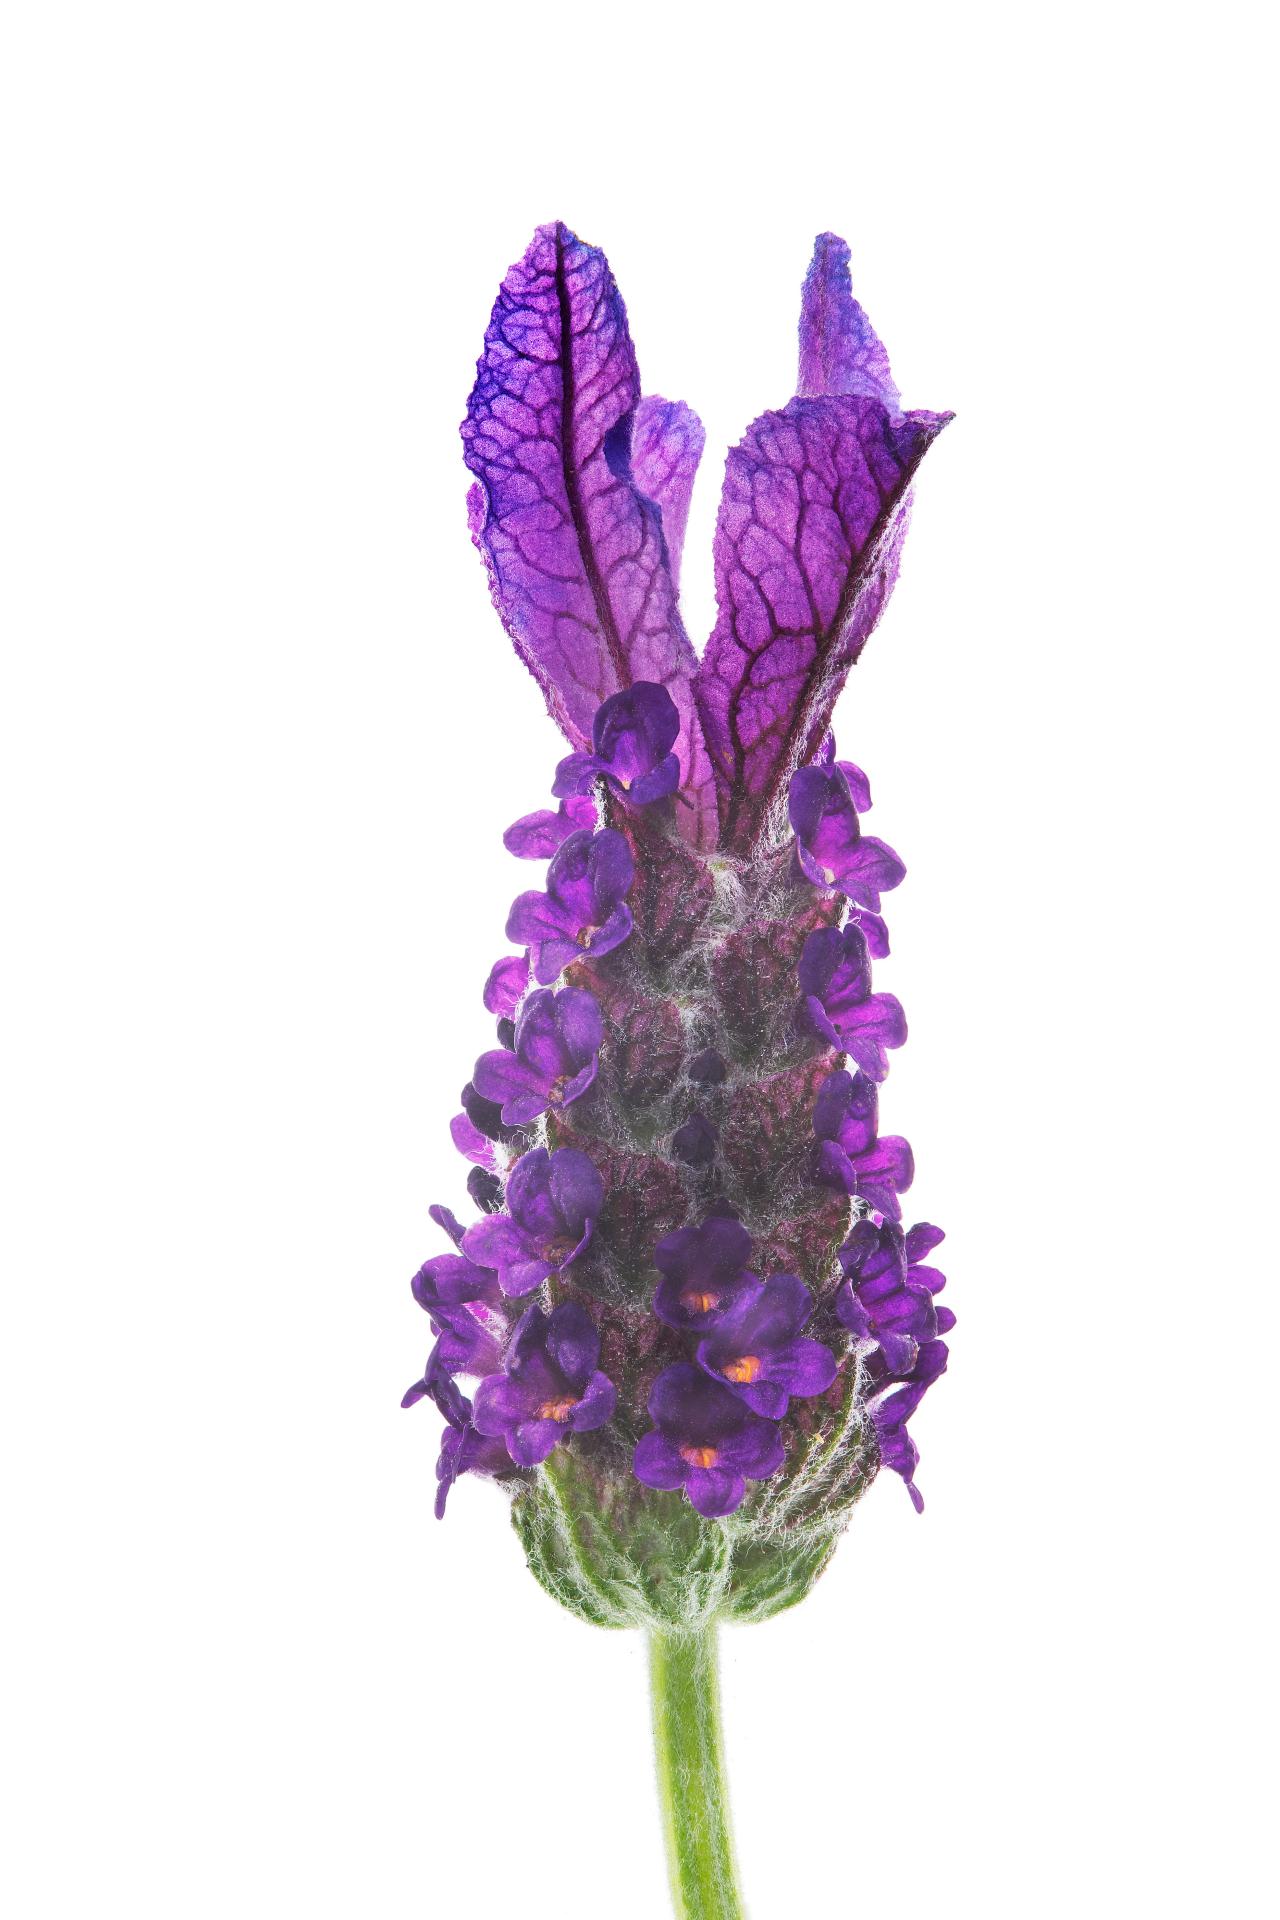 Lavender flowers photo